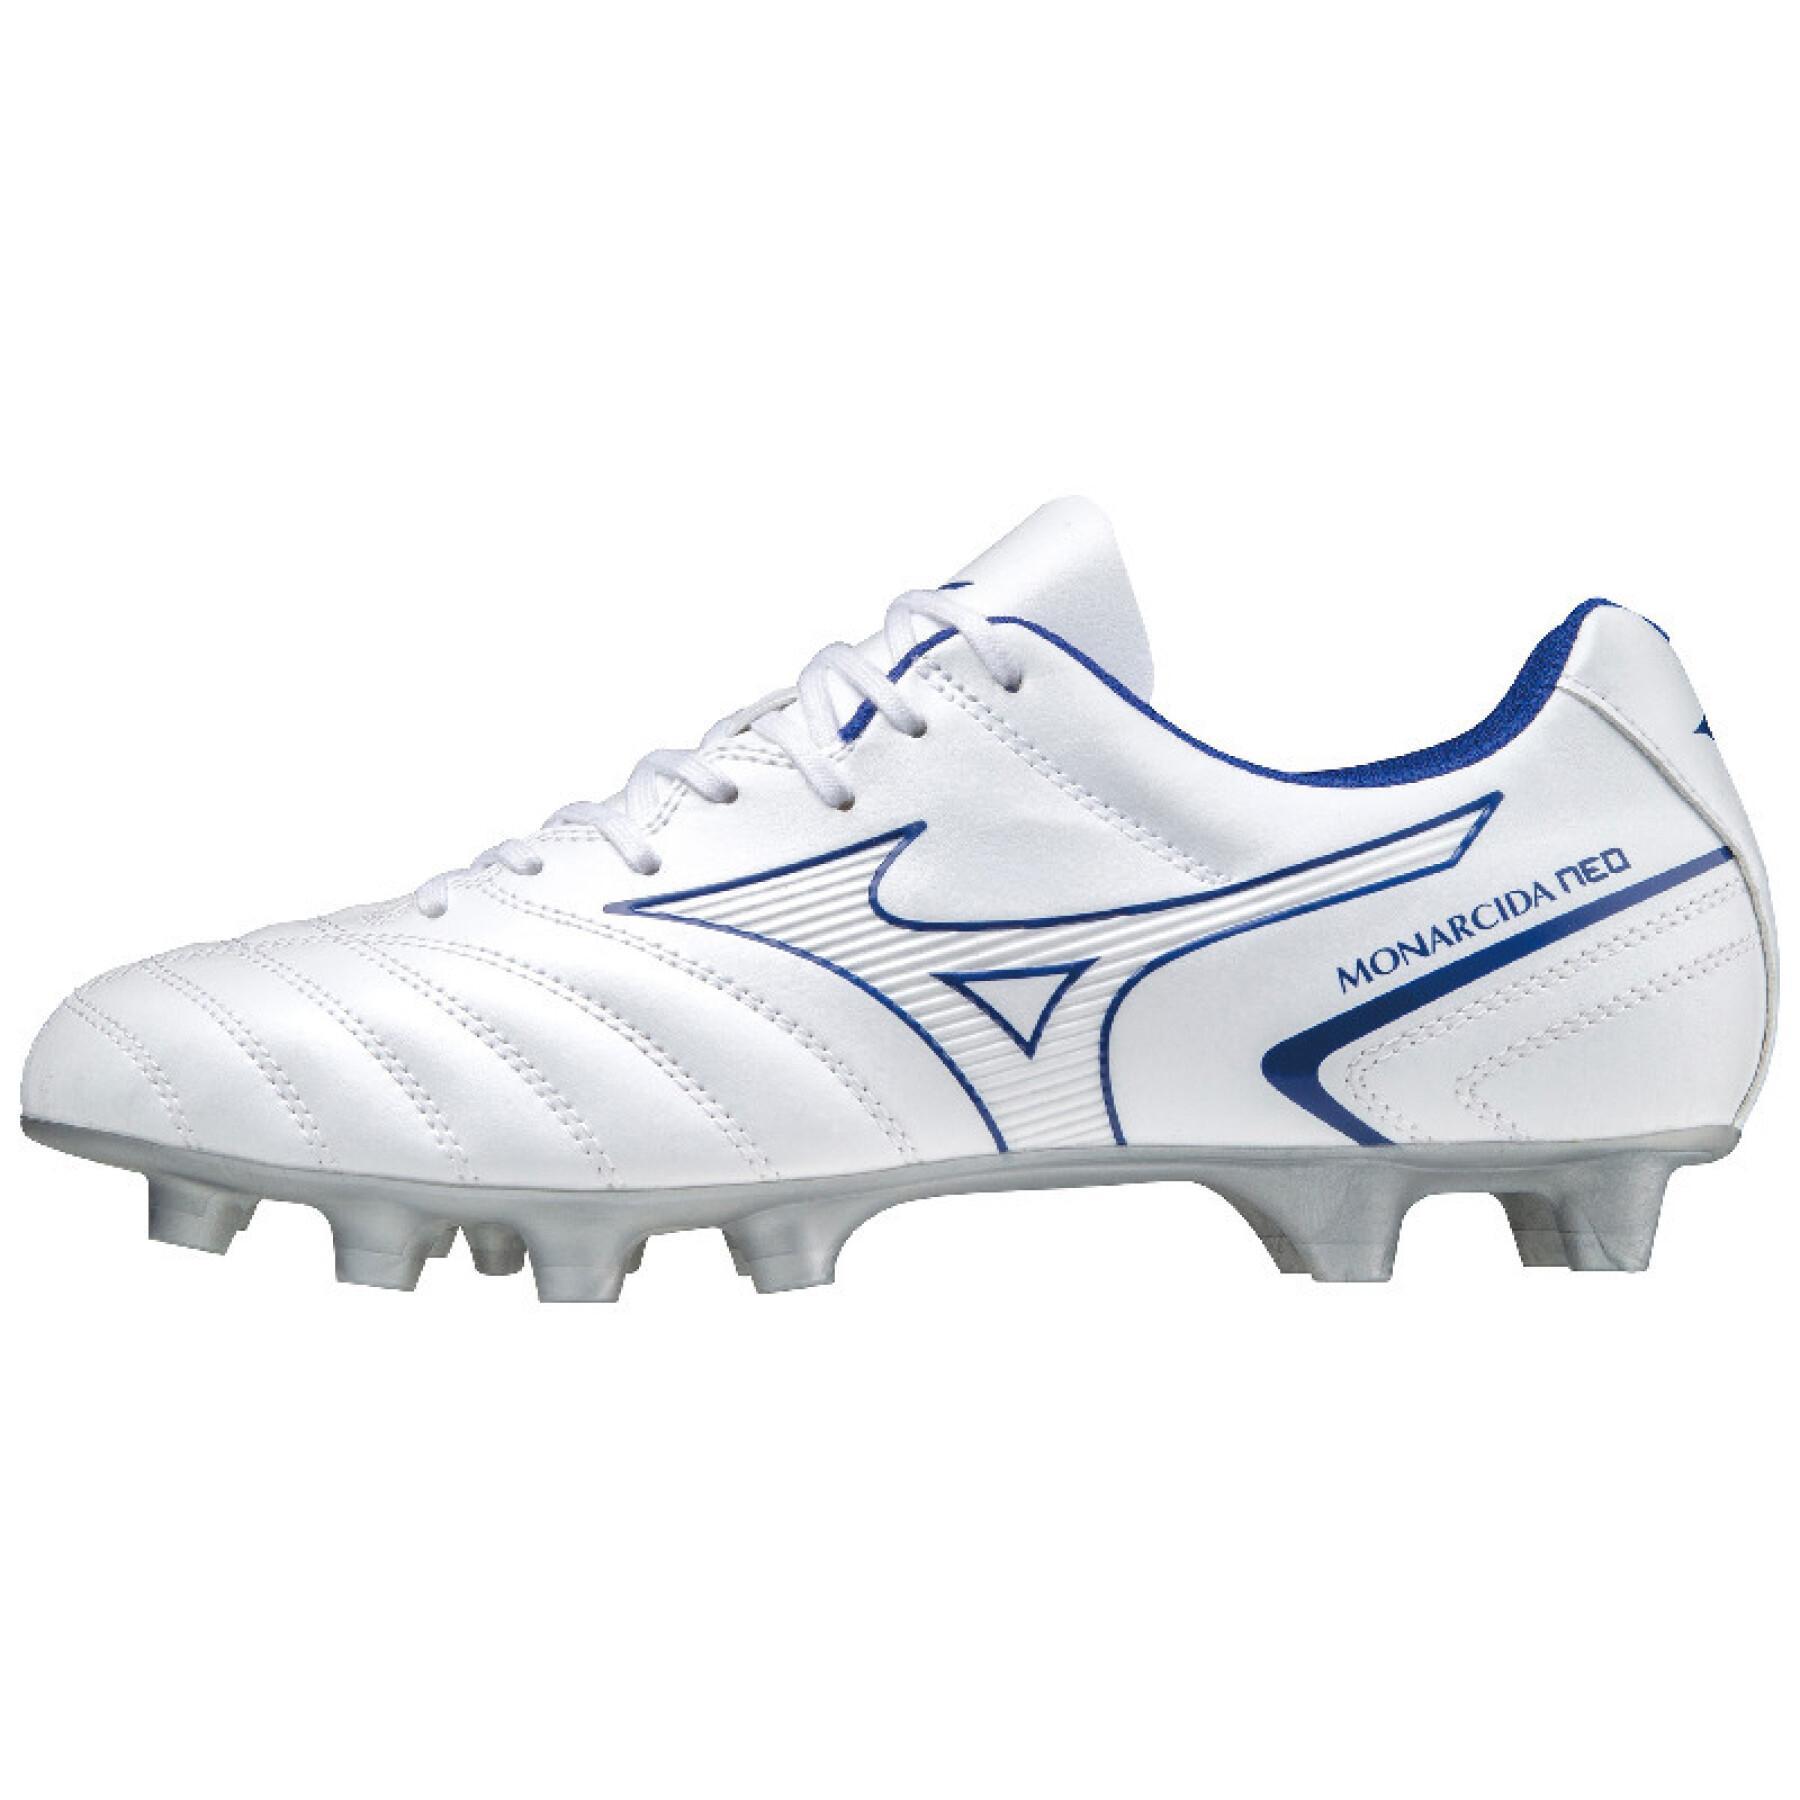 Mizuno Monarcida Neo Select MD Football Shoes Soccer Cleats Boots P1GA192523 